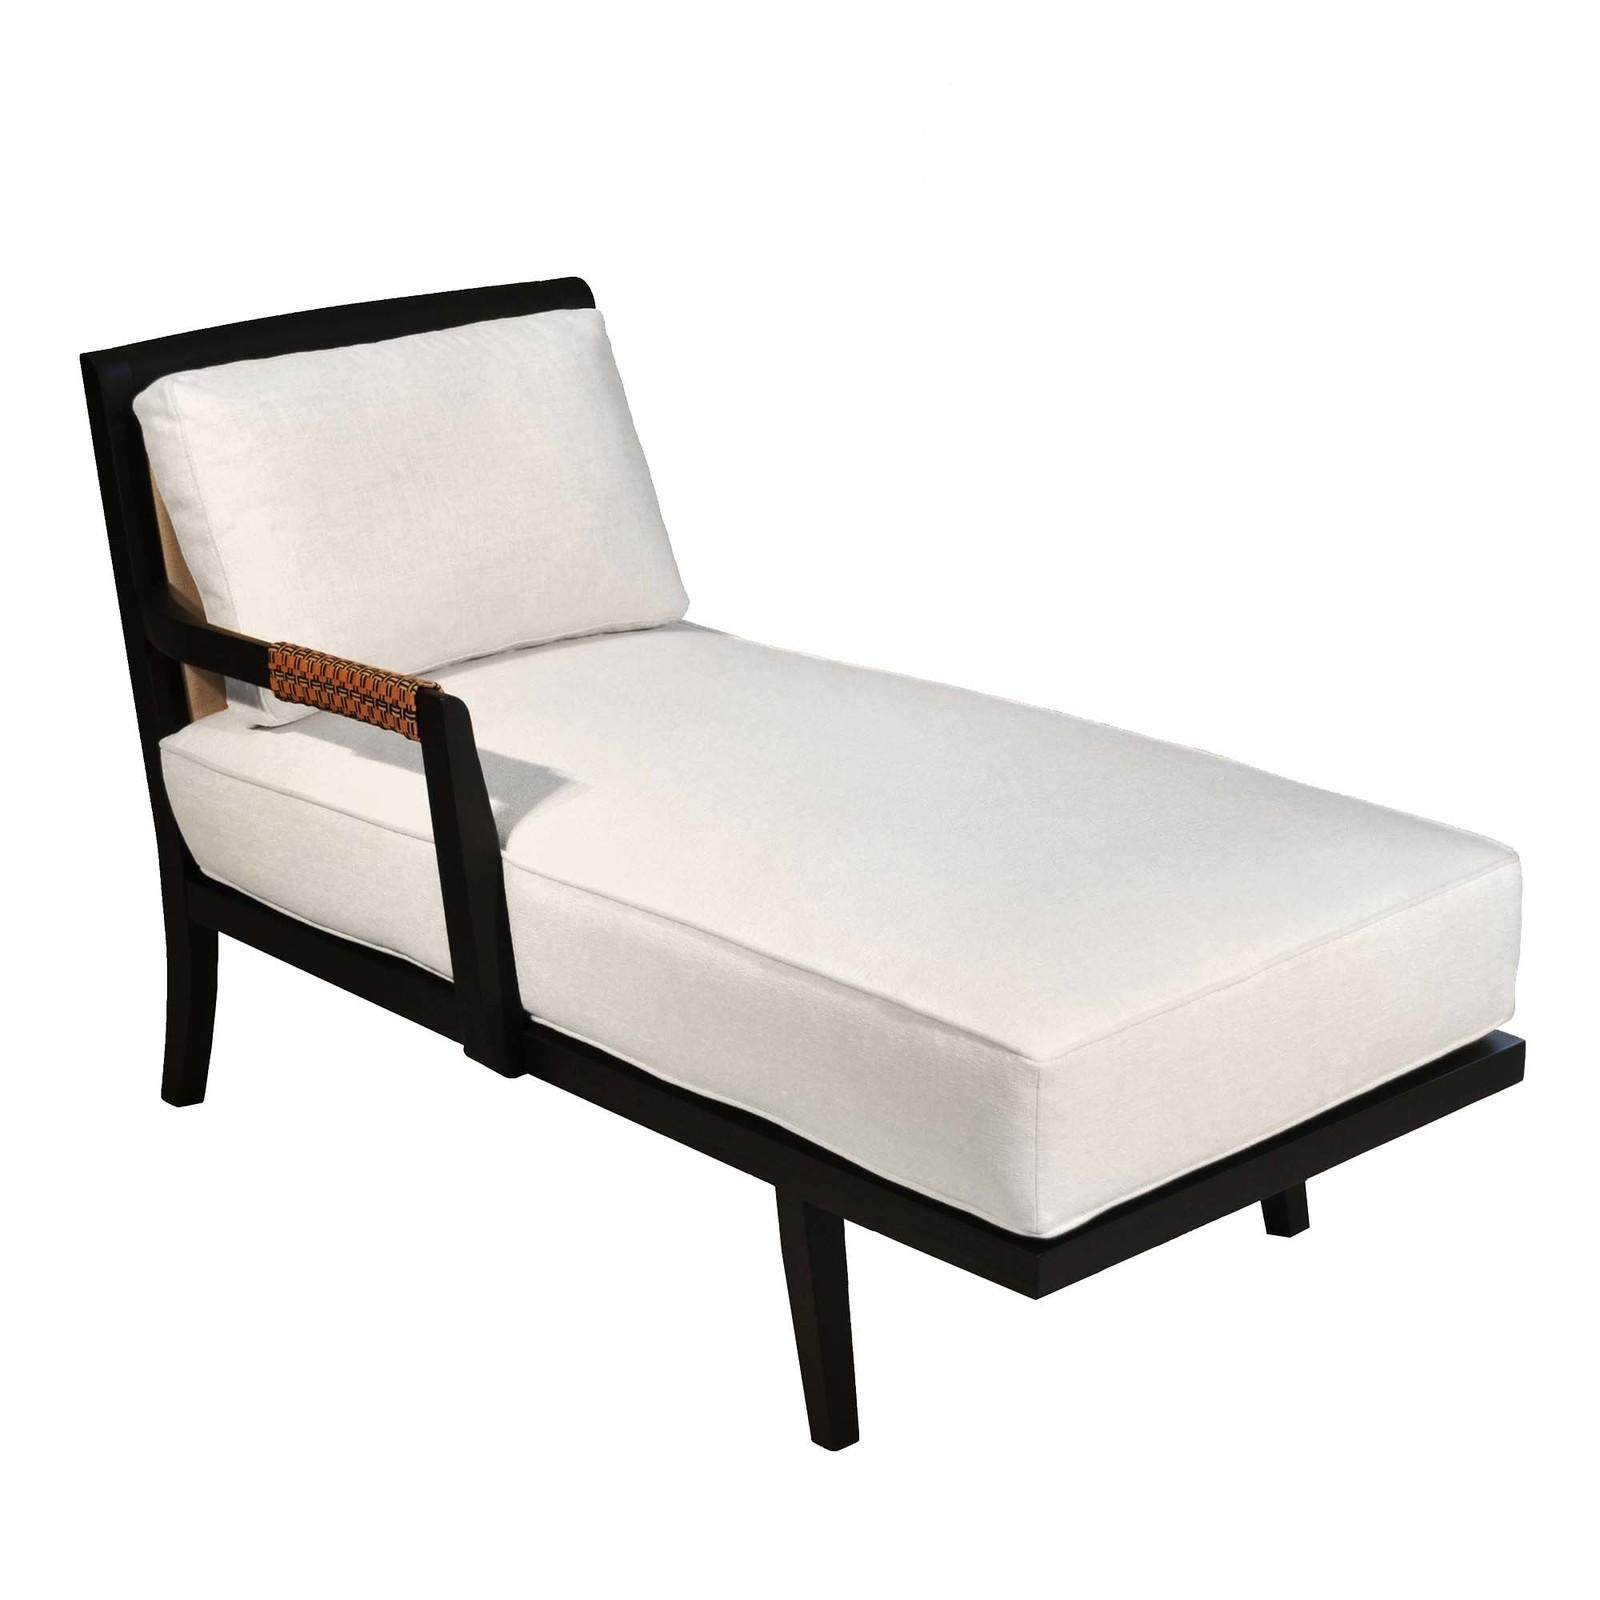 Italian Dan White Chaise Lounge For Sale